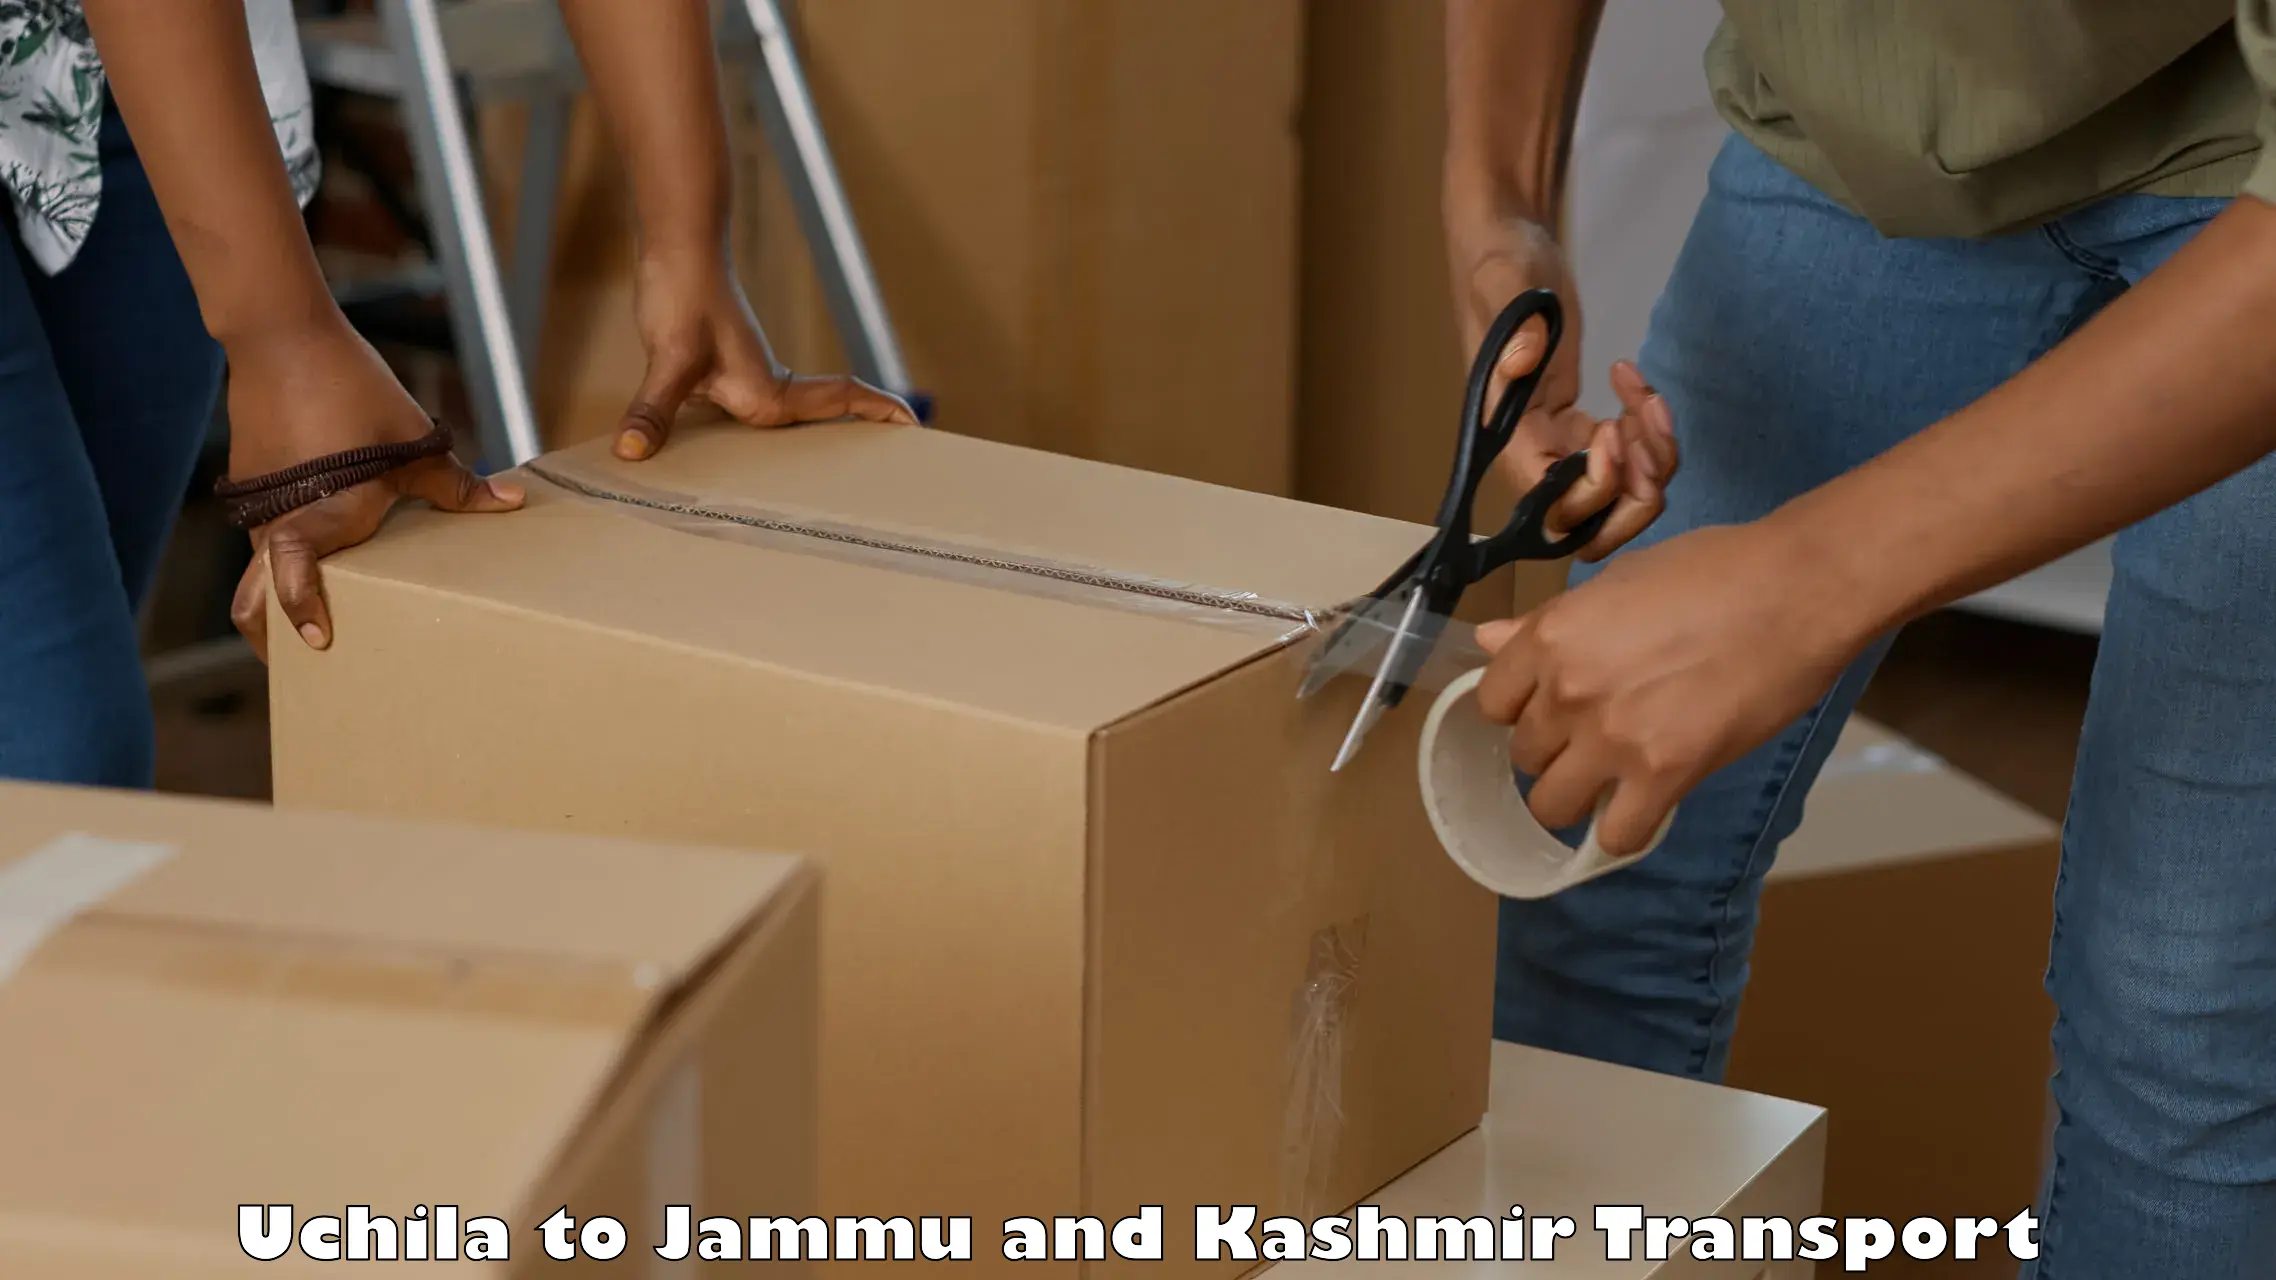 Truck transport companies in India Uchila to Bandipur